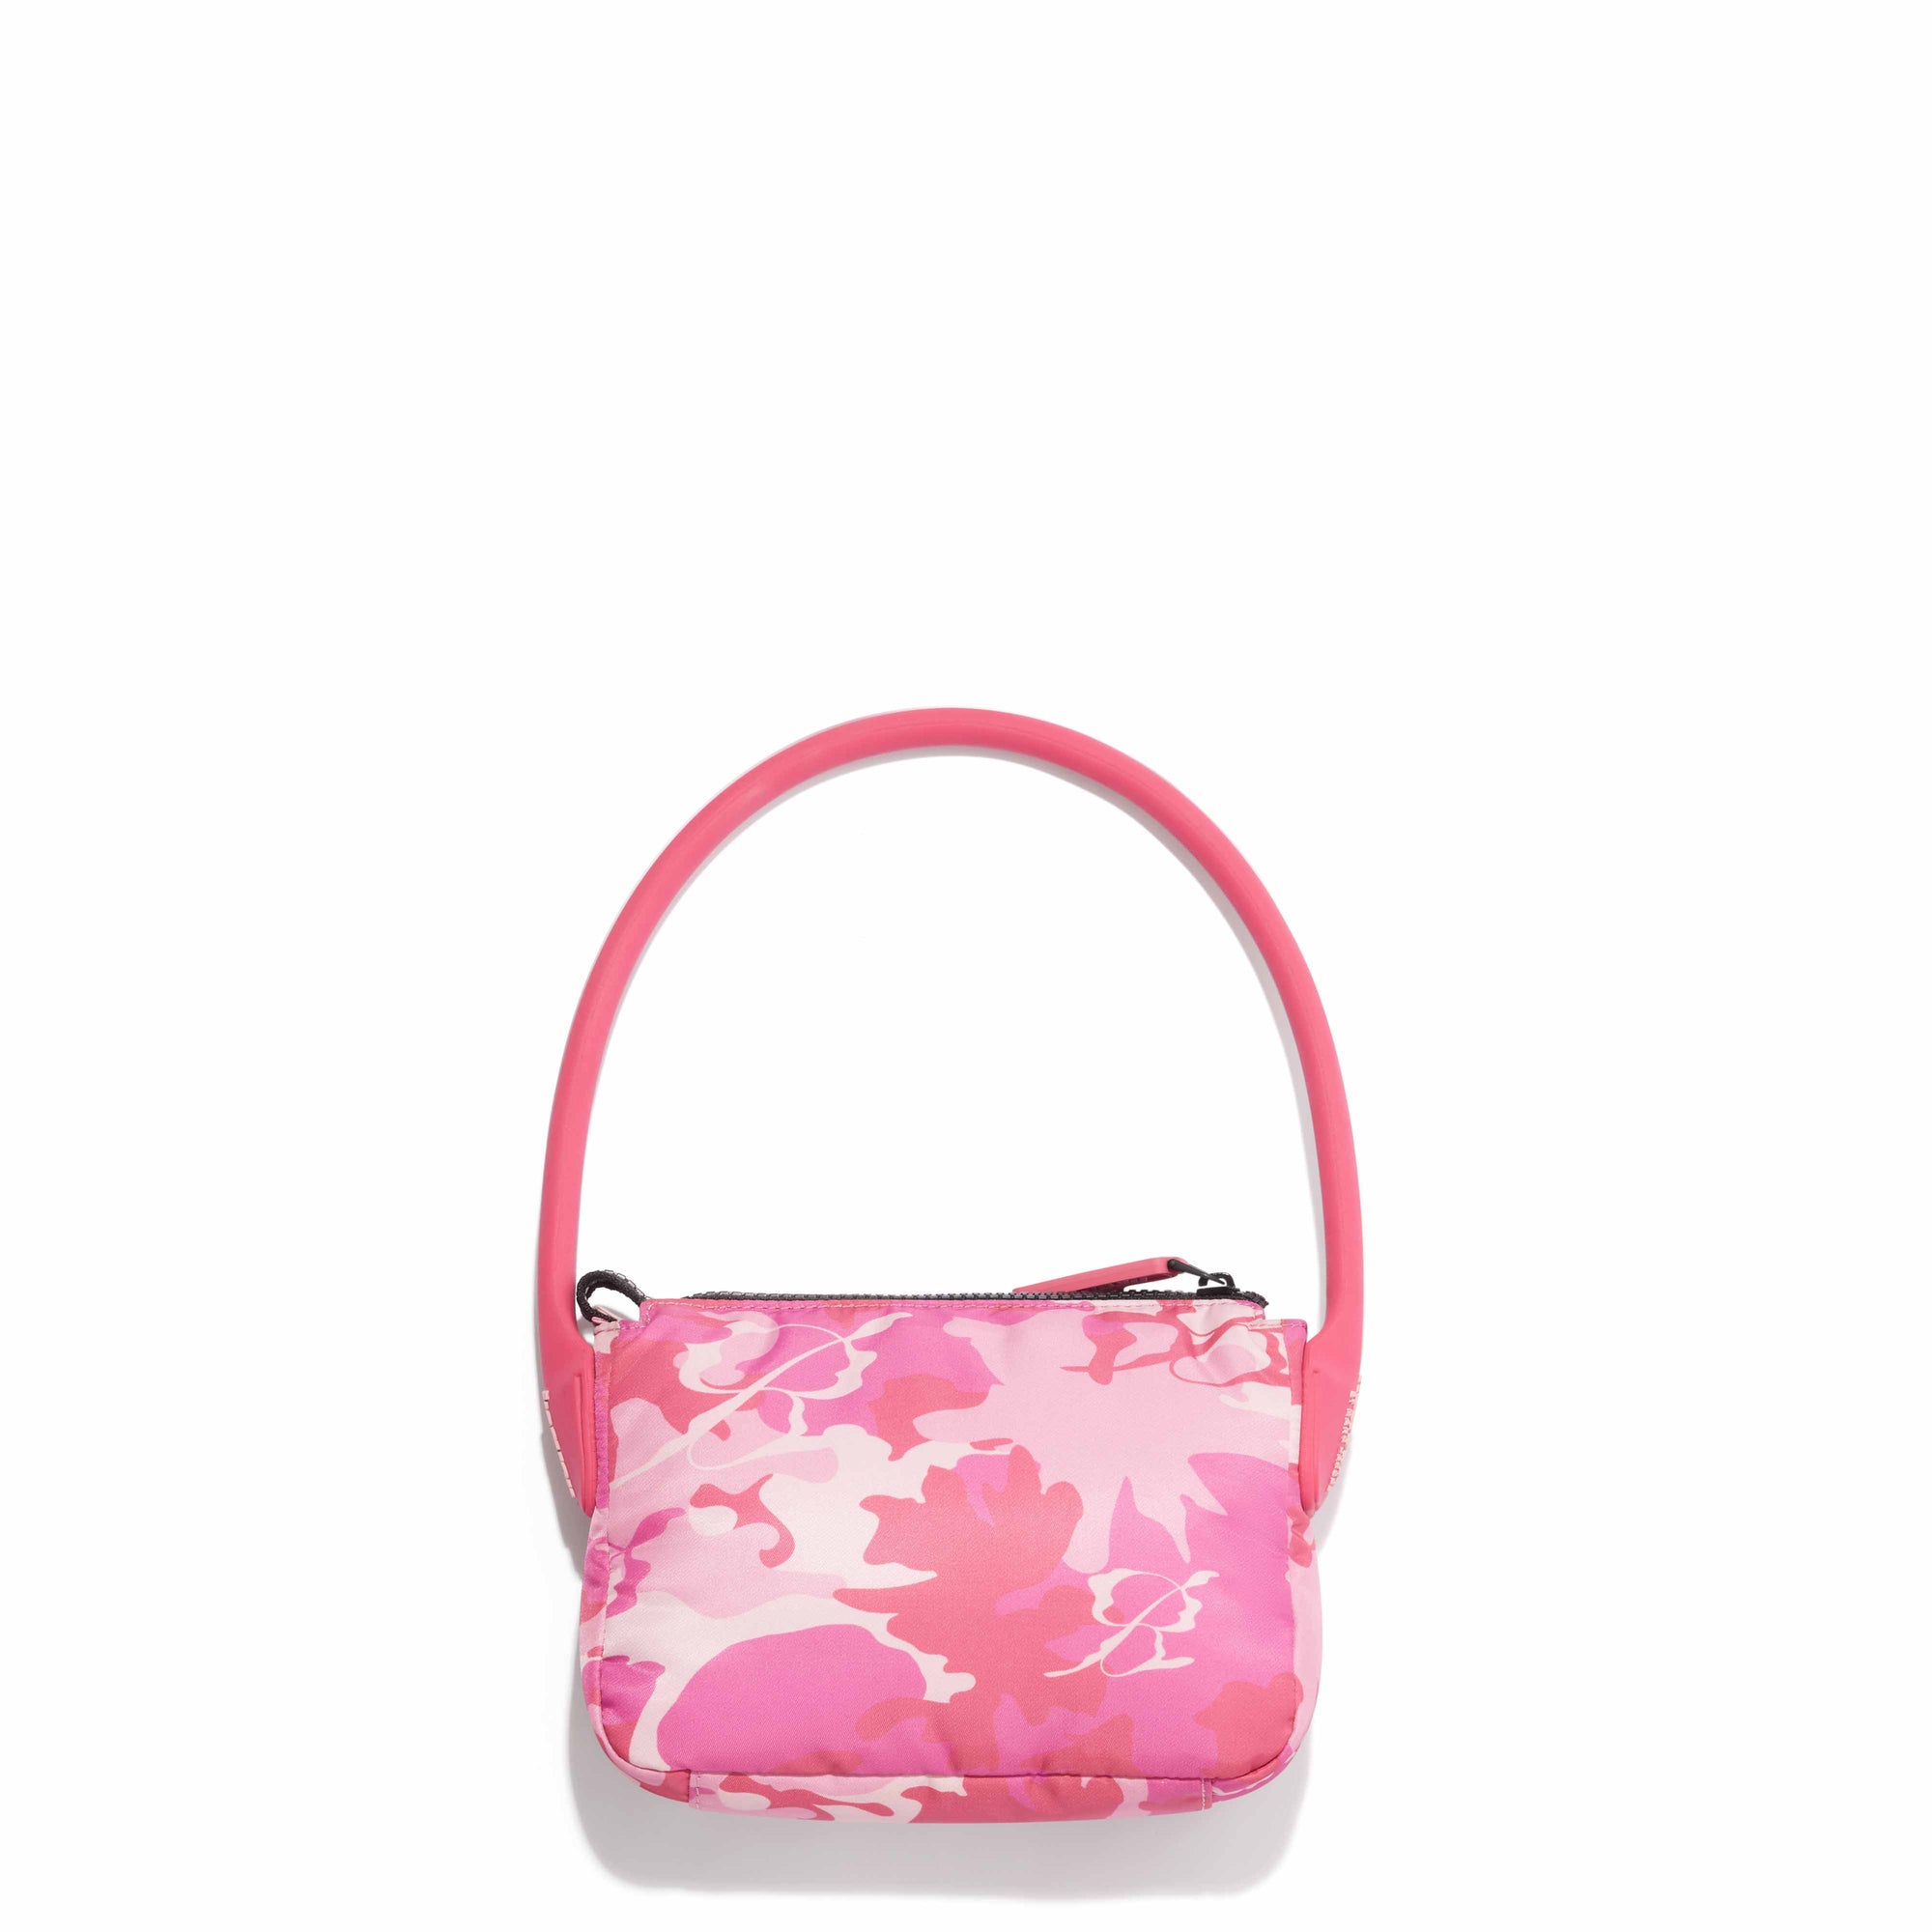 Blumarine by Marc Jacobs - Women’s Blumarine Mini Shoulder Bag - (Pink Multi) view 2